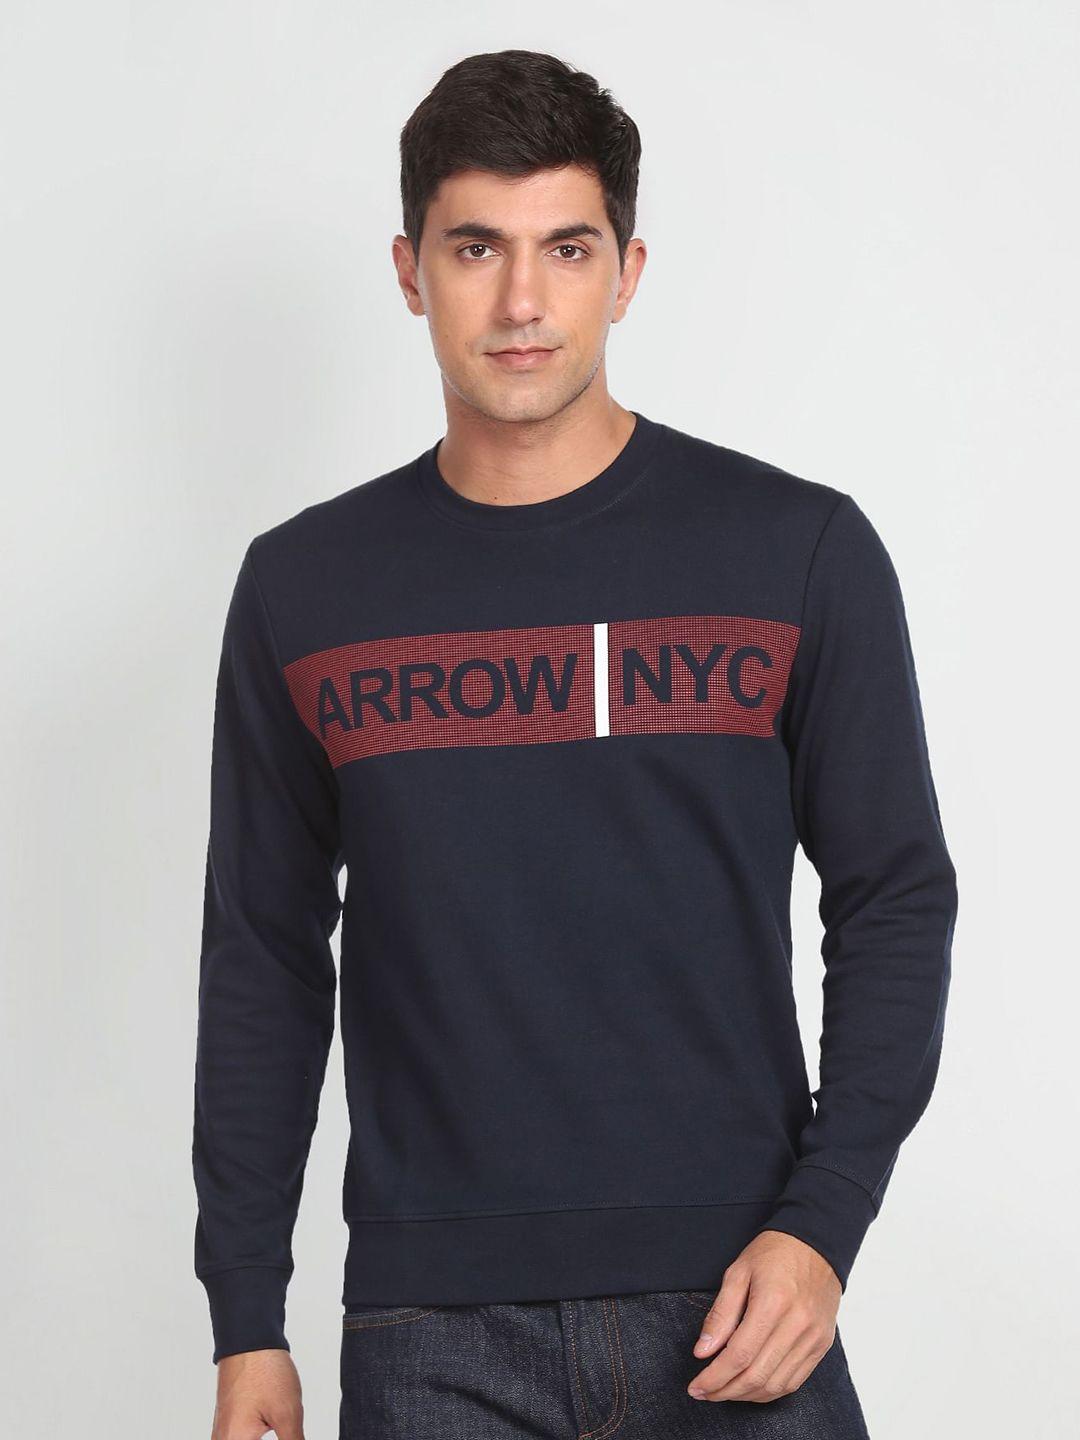 arrow-sport-typography-printed-sweatshirt